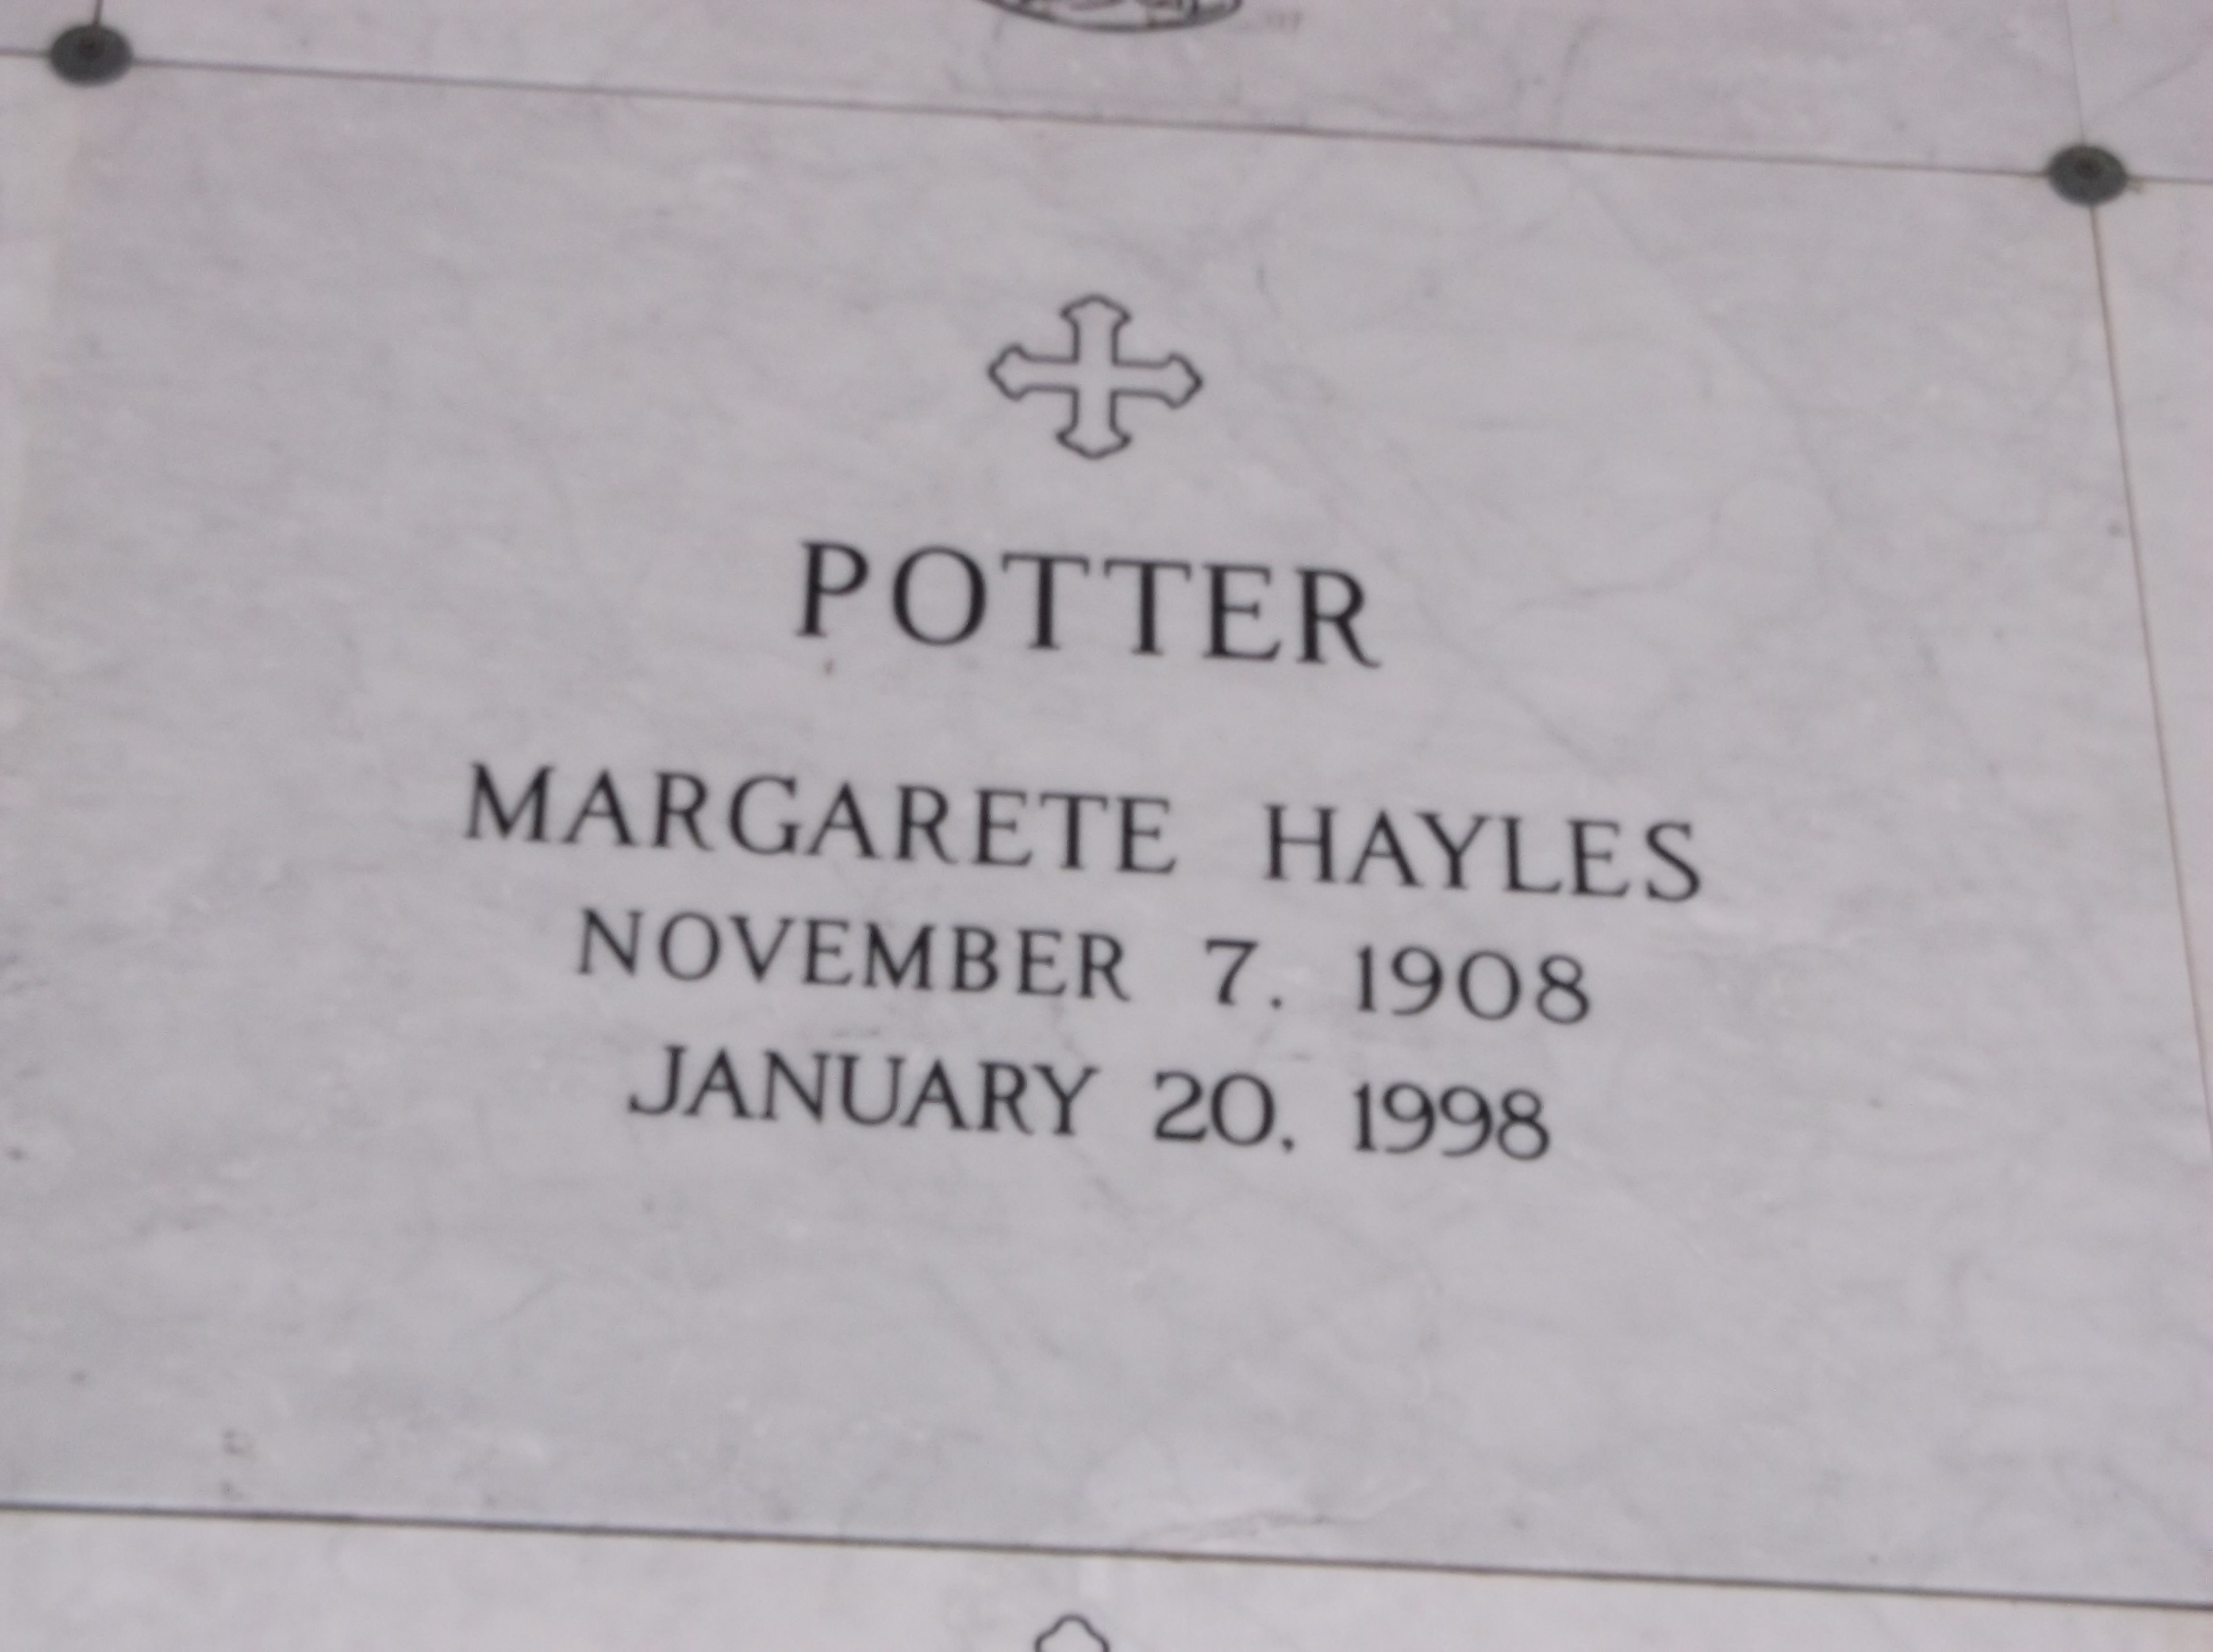 Margarete Hayles Potter